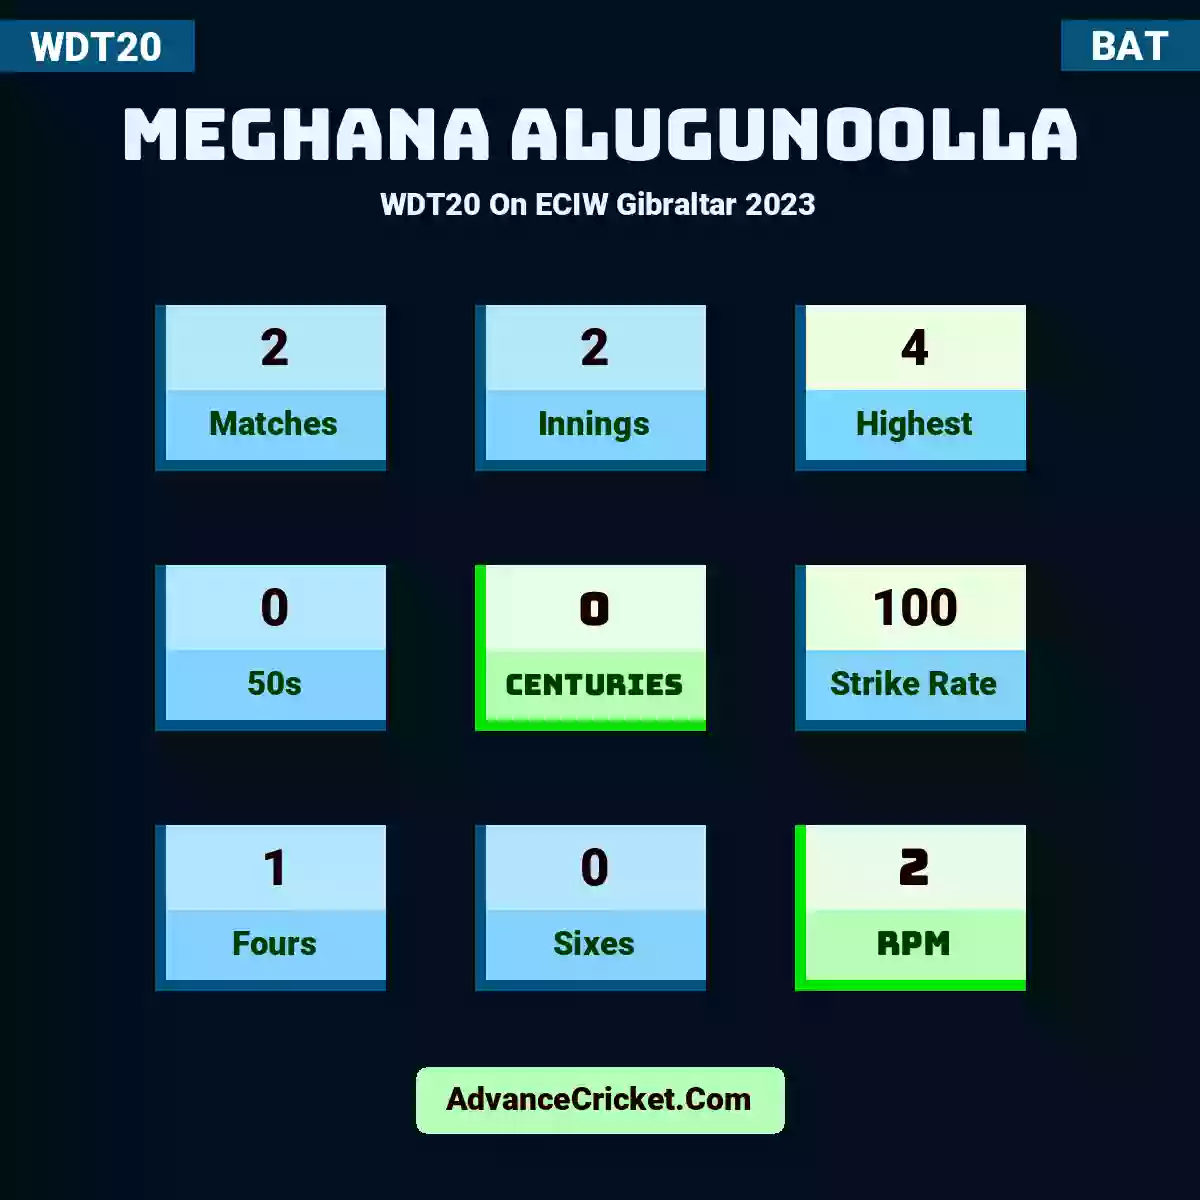 Meghana Alugunoolla WDT20  On ECIW Gibraltar 2023, Meghana Alugunoolla played 2 matches, scored 4 runs as highest, 0 half-centuries, and 0 centuries, with a strike rate of 100. M.Alugunoolla hit 1 fours and 0 sixes, with an RPM of 2.